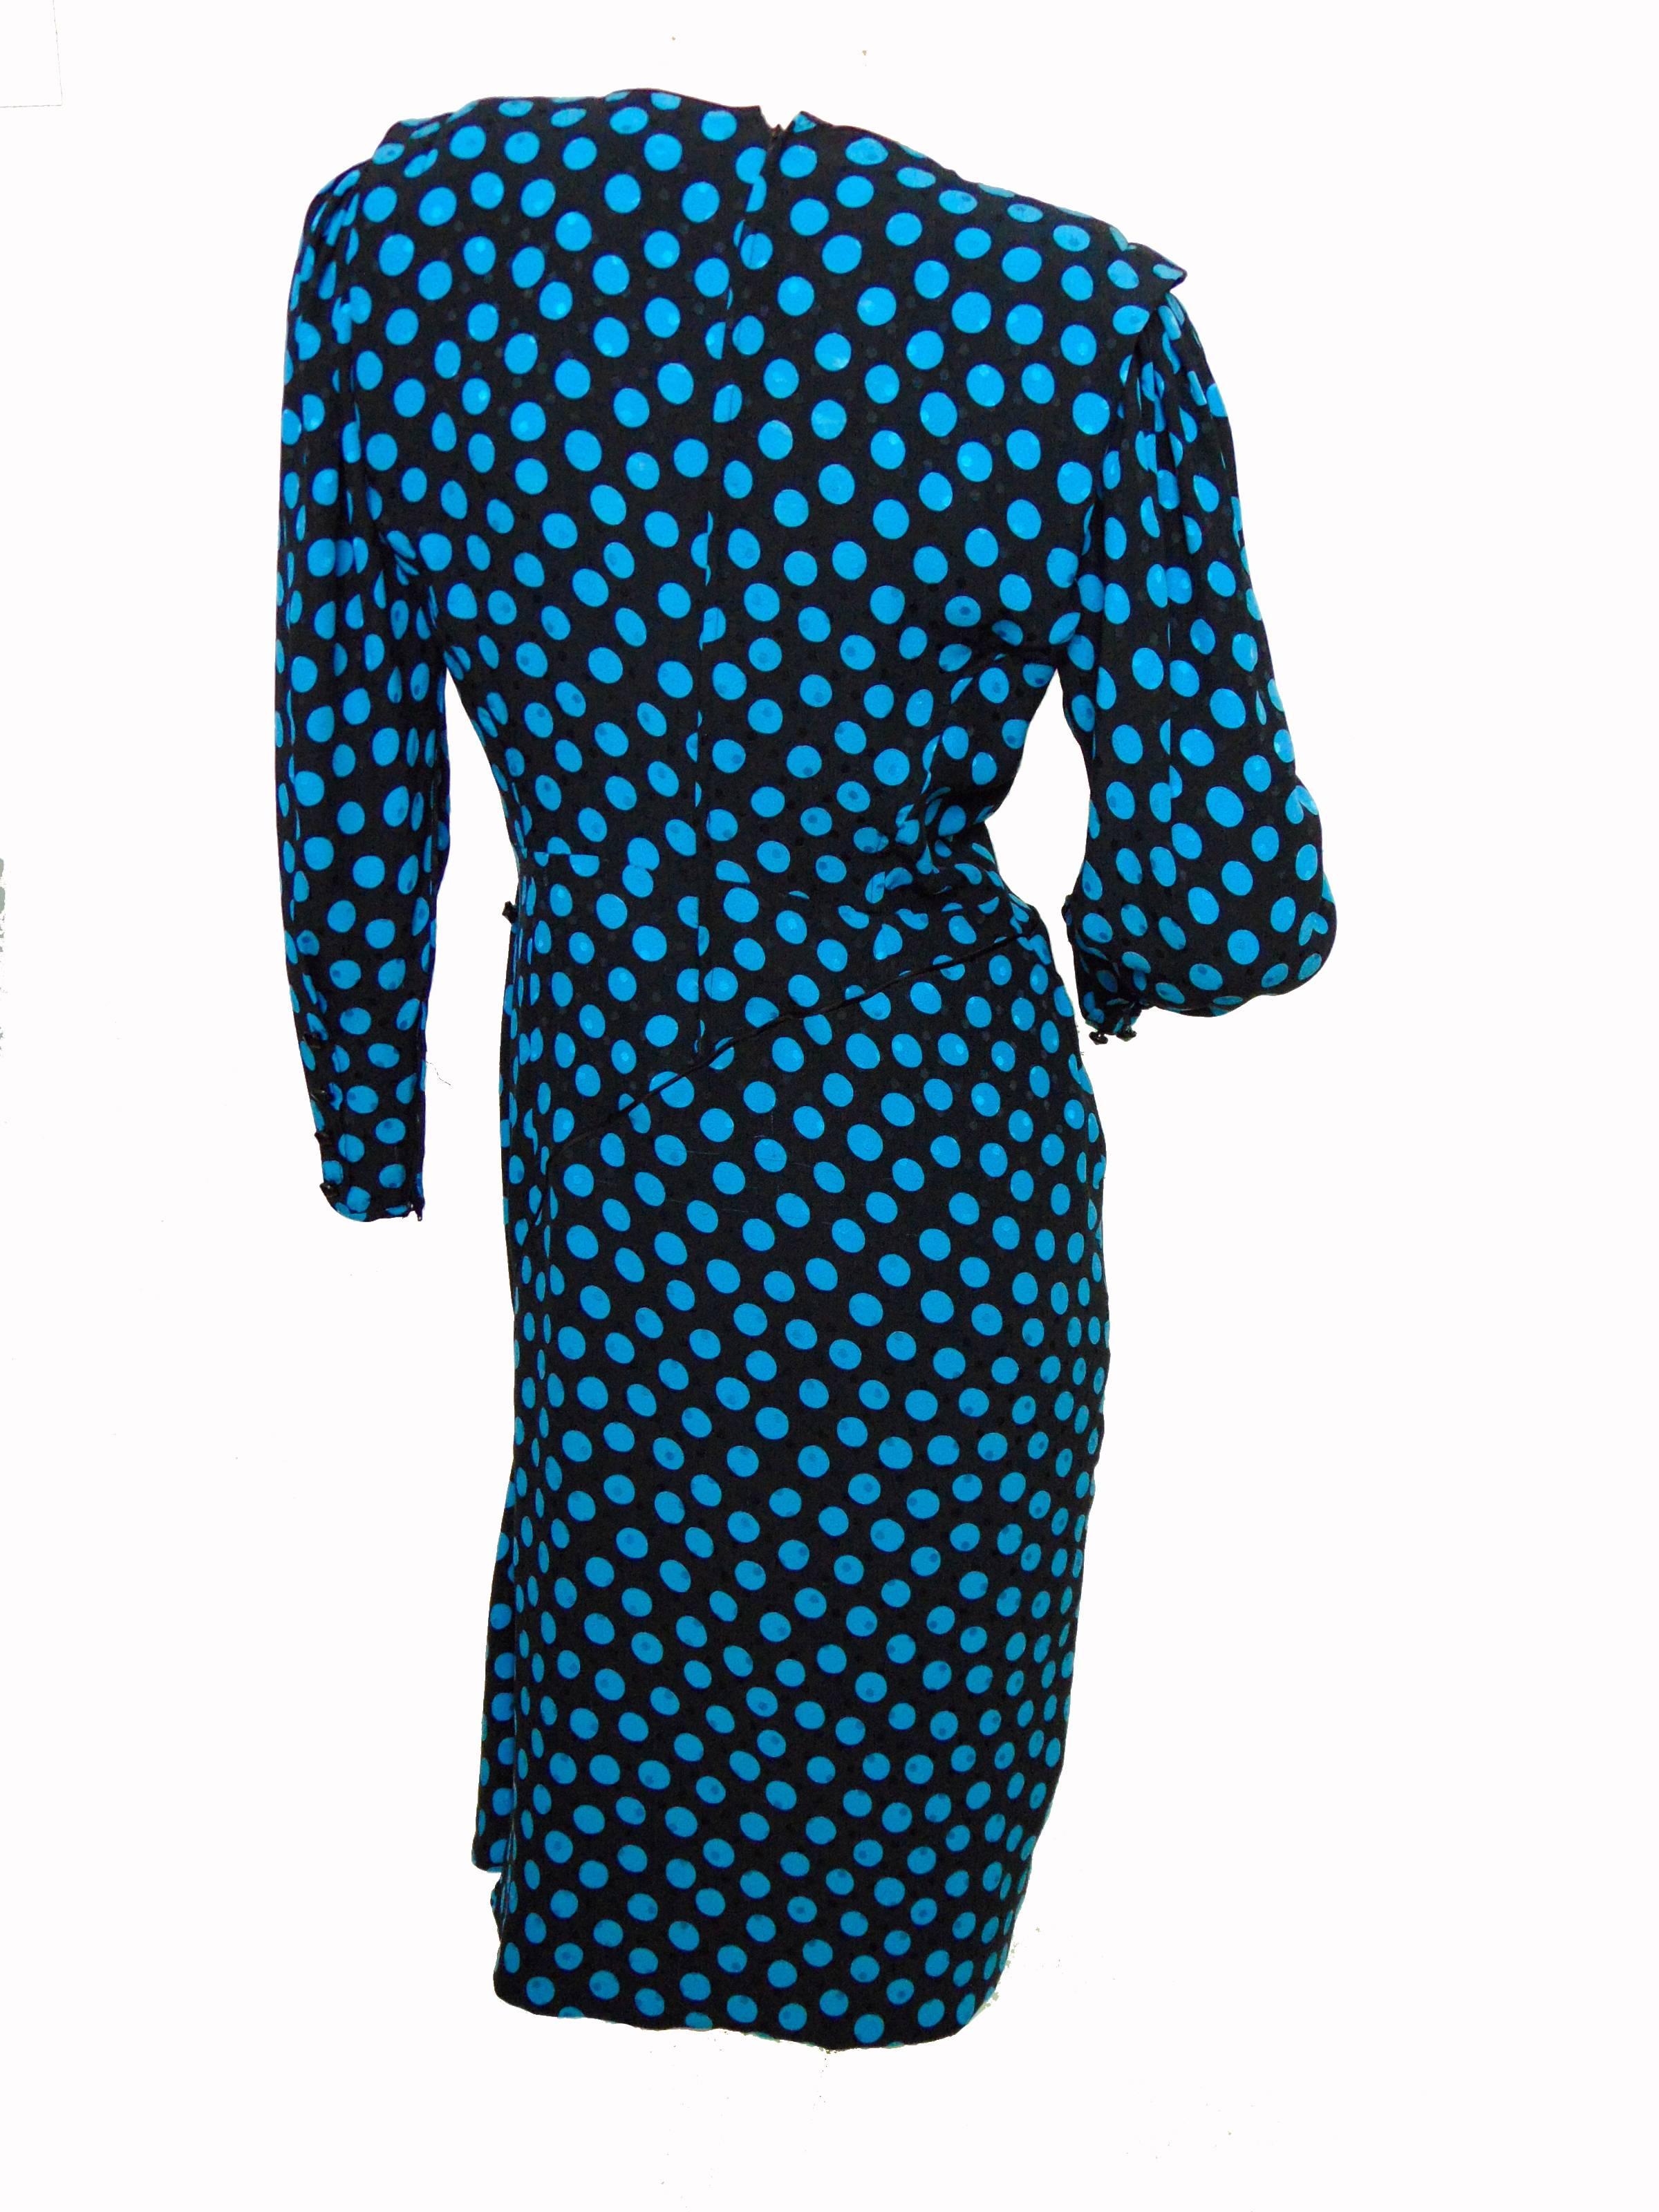 Women's Emanuel Ungaro Parallele Silk Dress with Polka Dots 1980s Size S